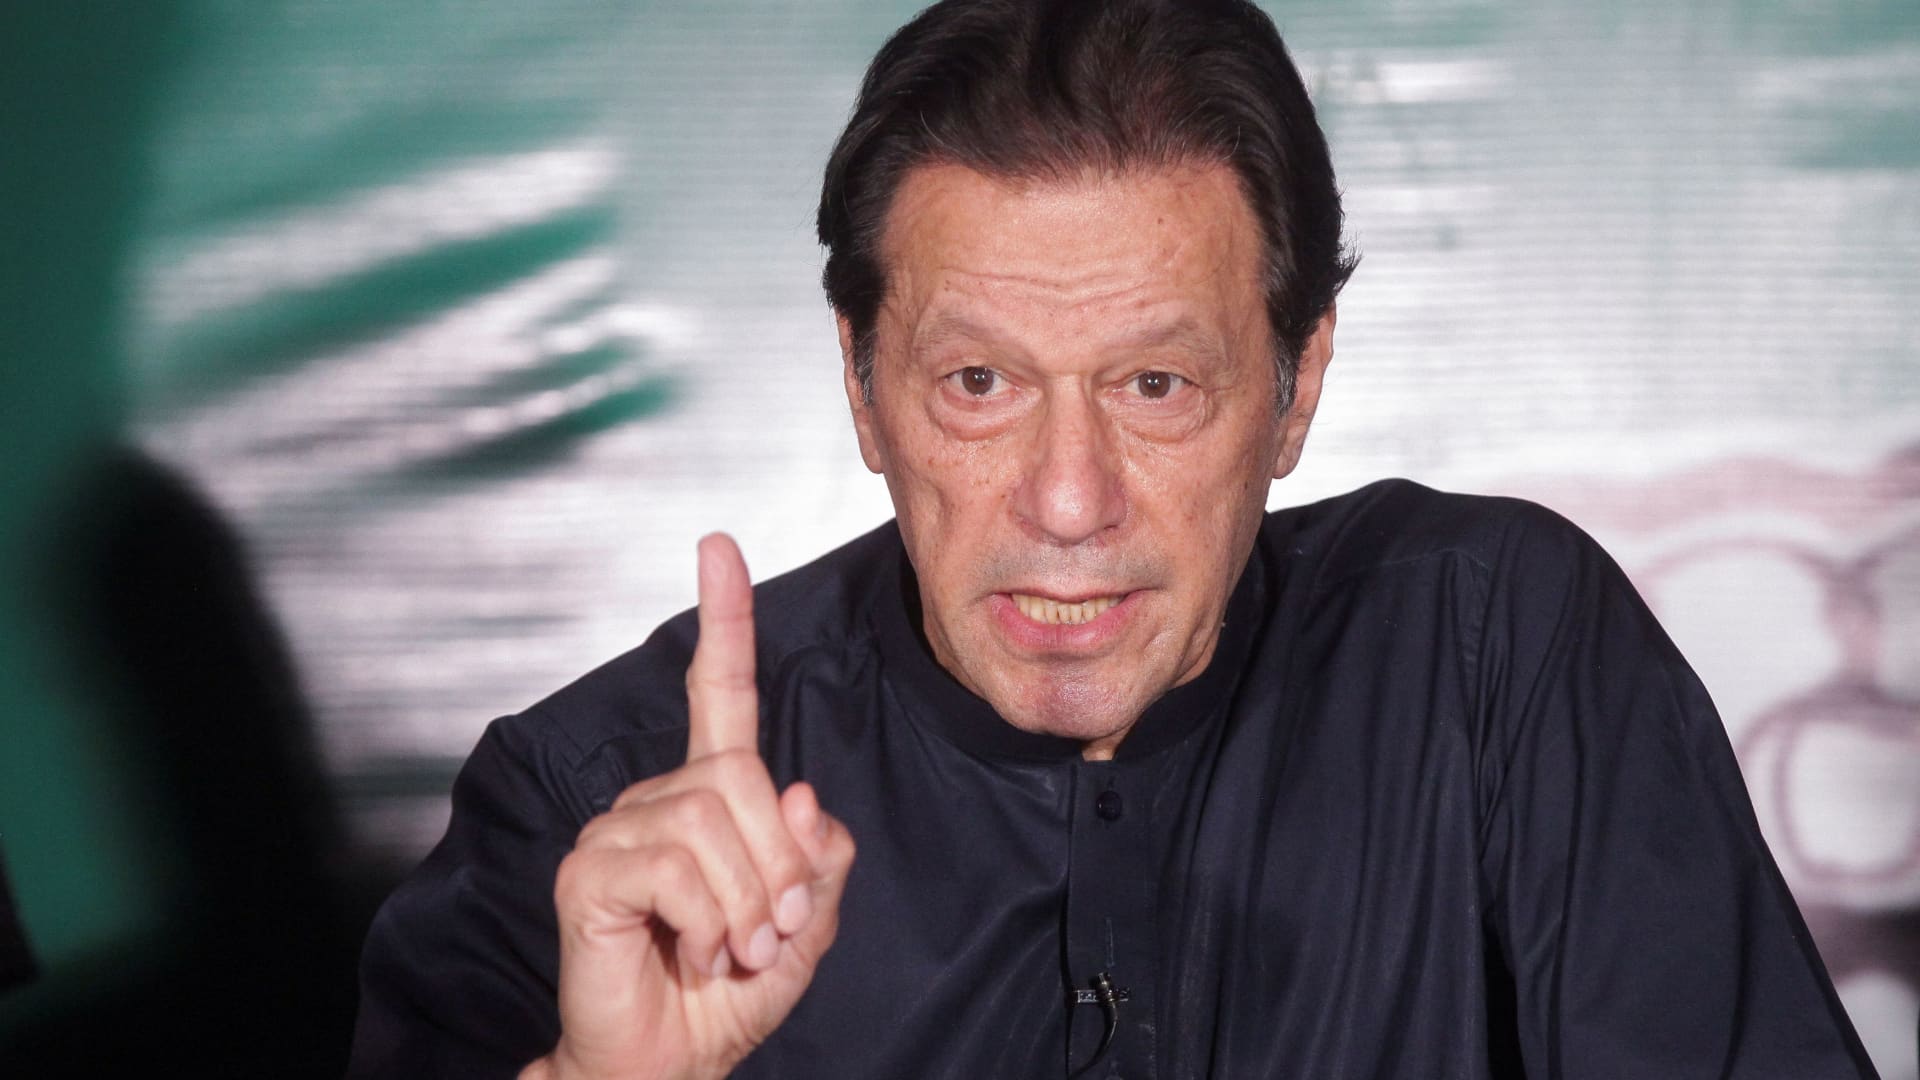 Former Pakistan Prime Minister Imran Khan gets 10-year jail term